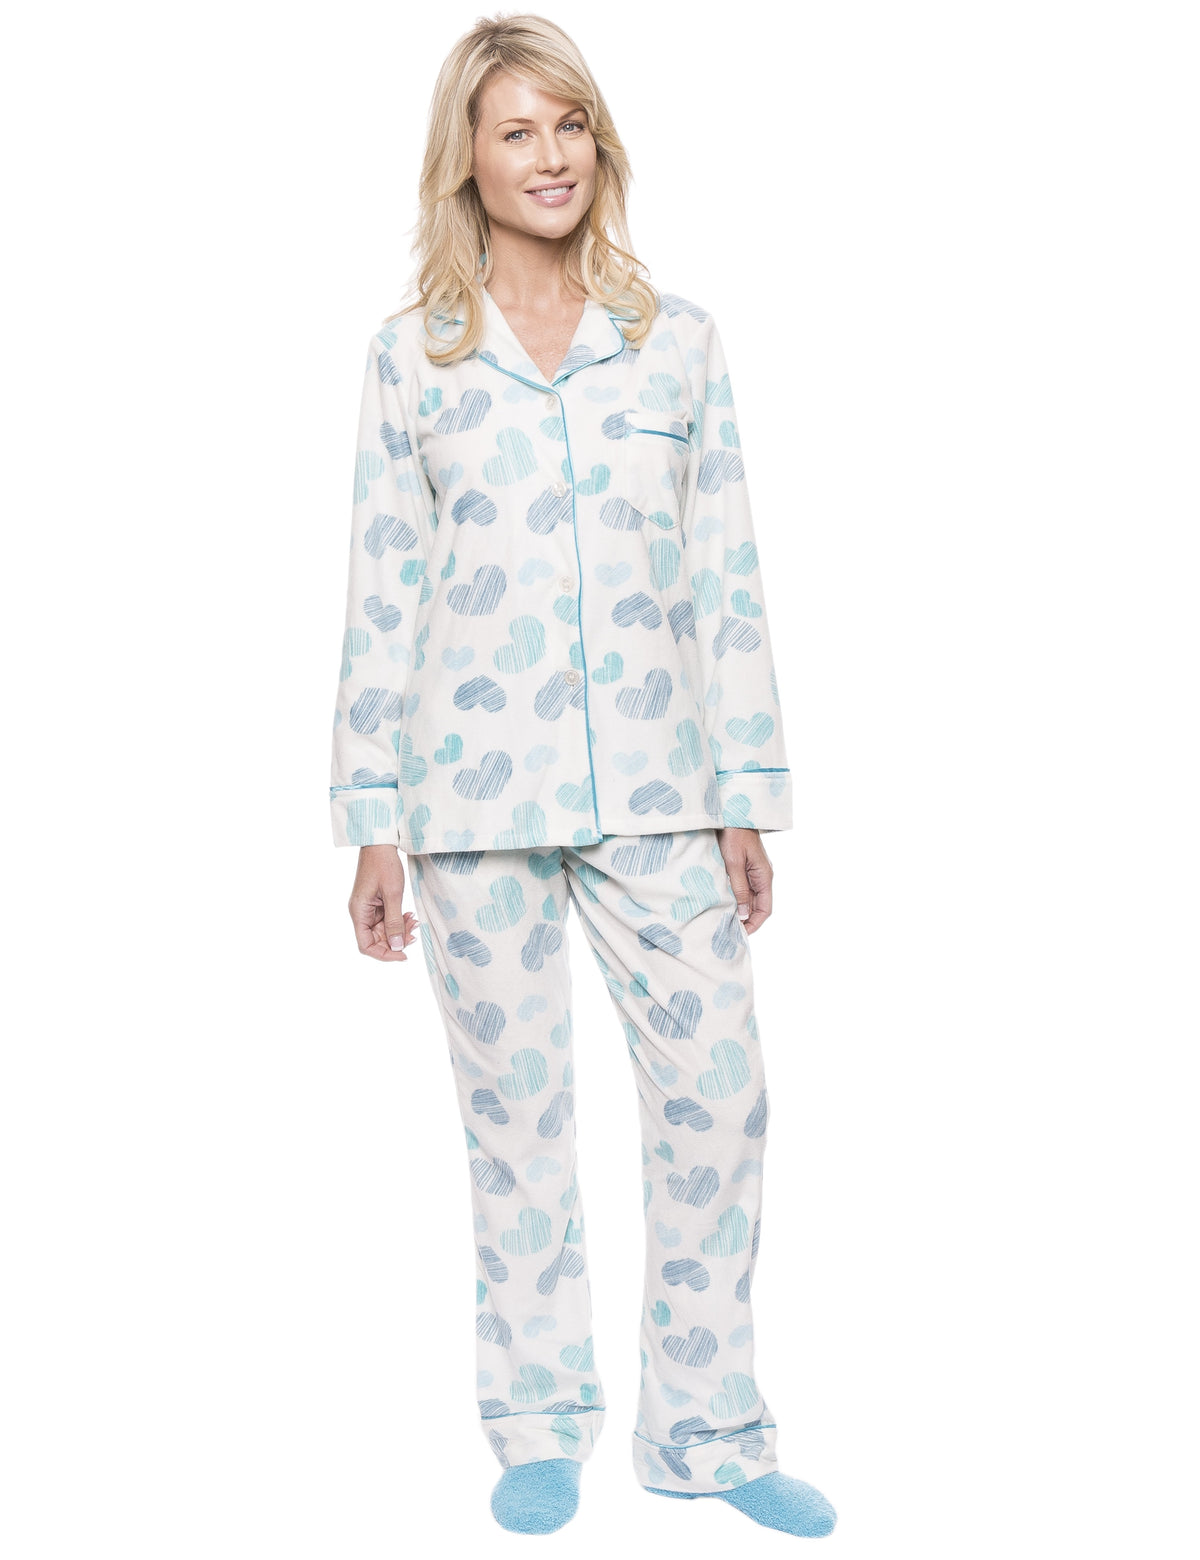 Womens Microfleece Pajama Sleepwear Set - Scribbled Hearts White/Blue